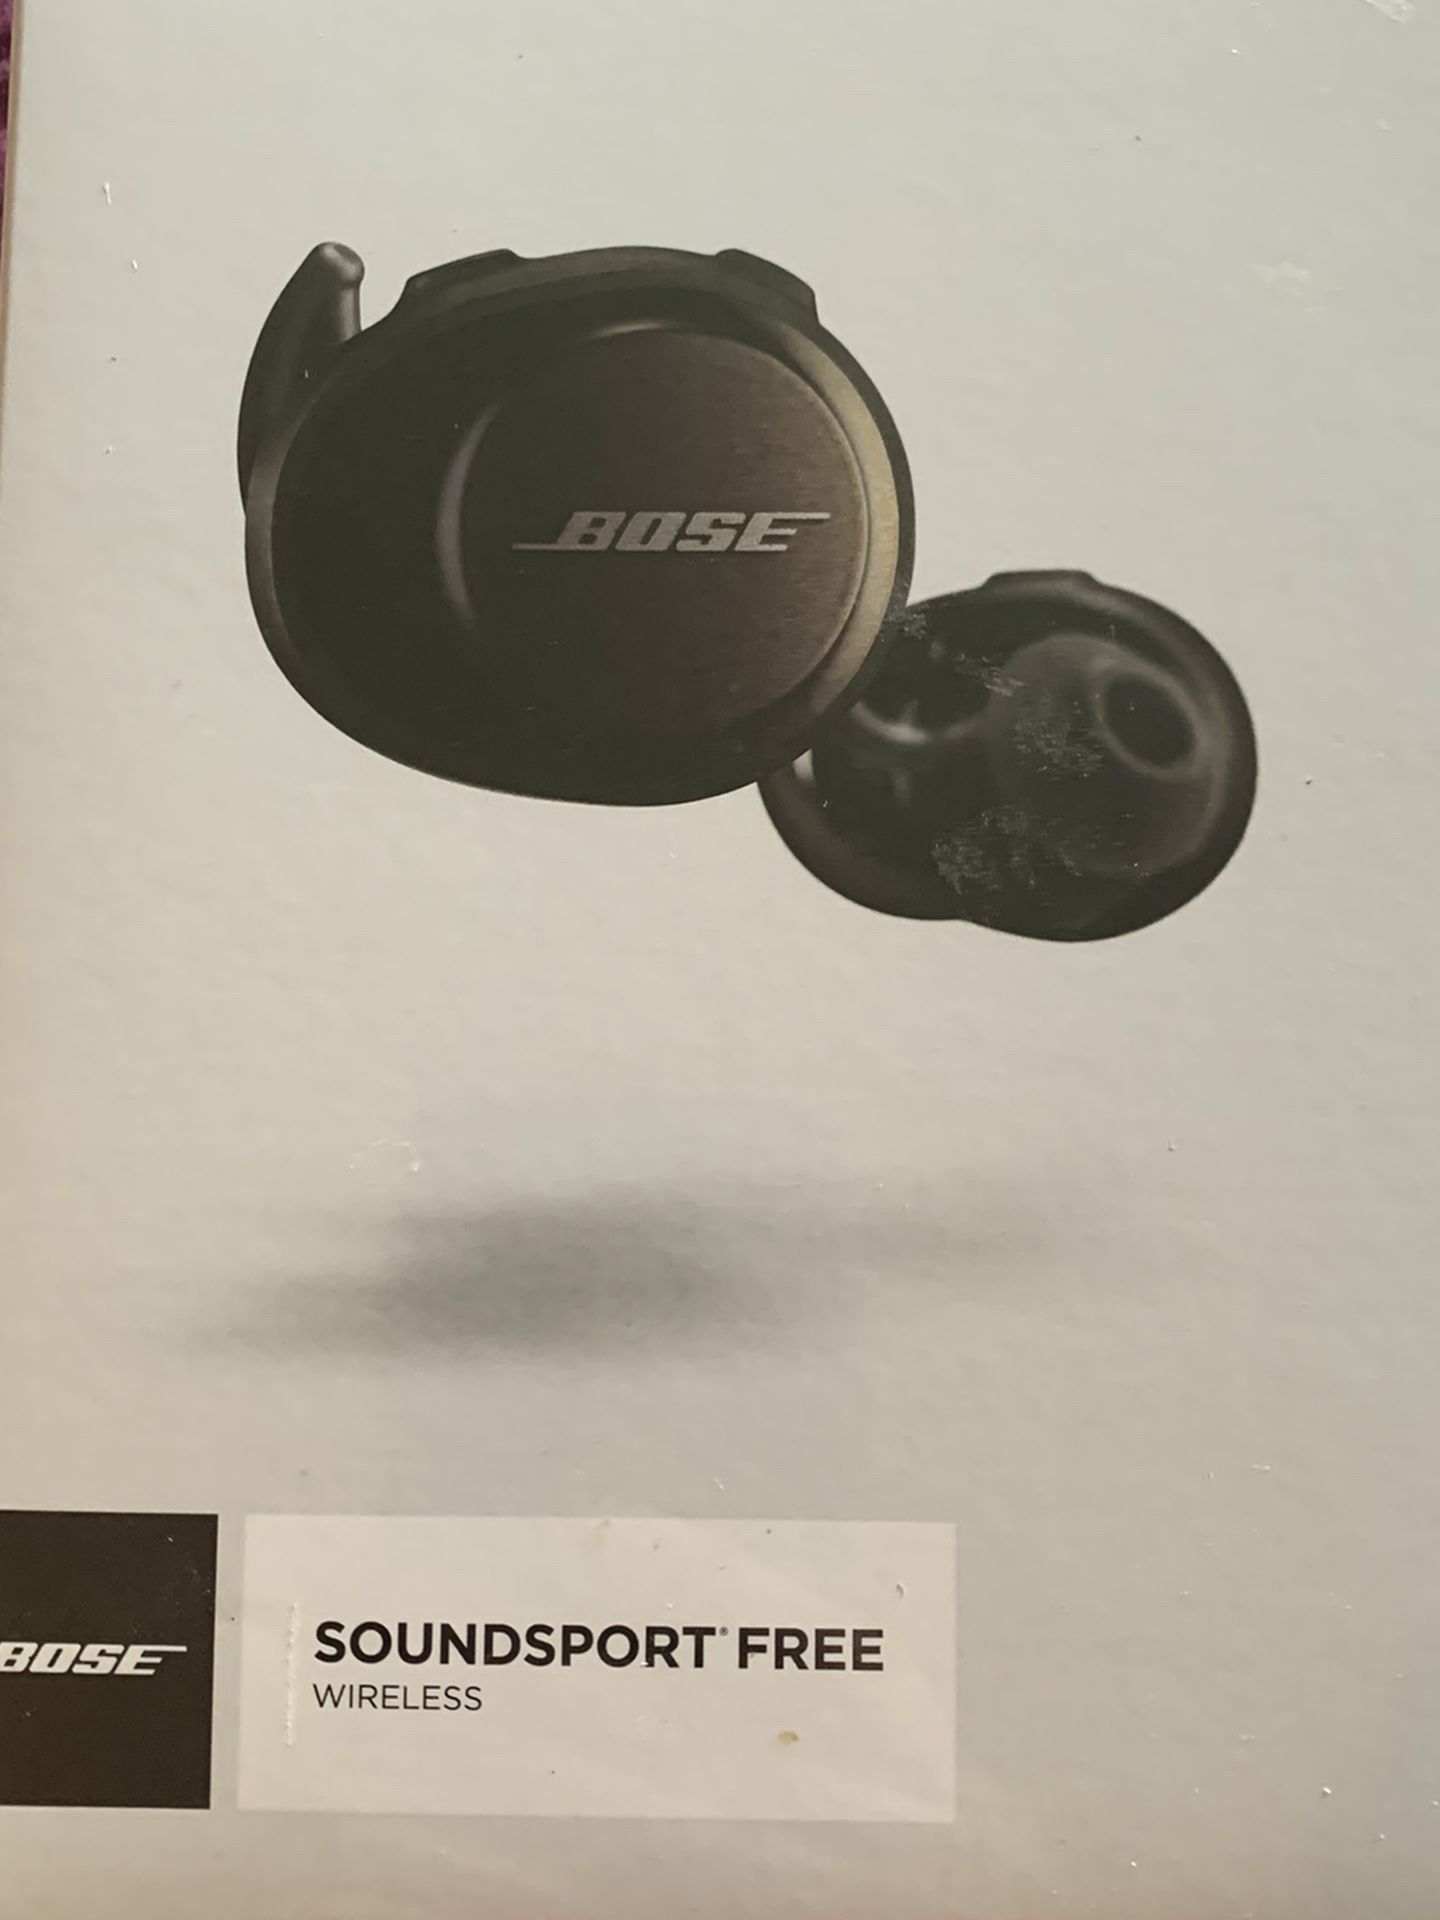 **Bose Soundsport Wireless Earbuds Brand New Factory Sealed****